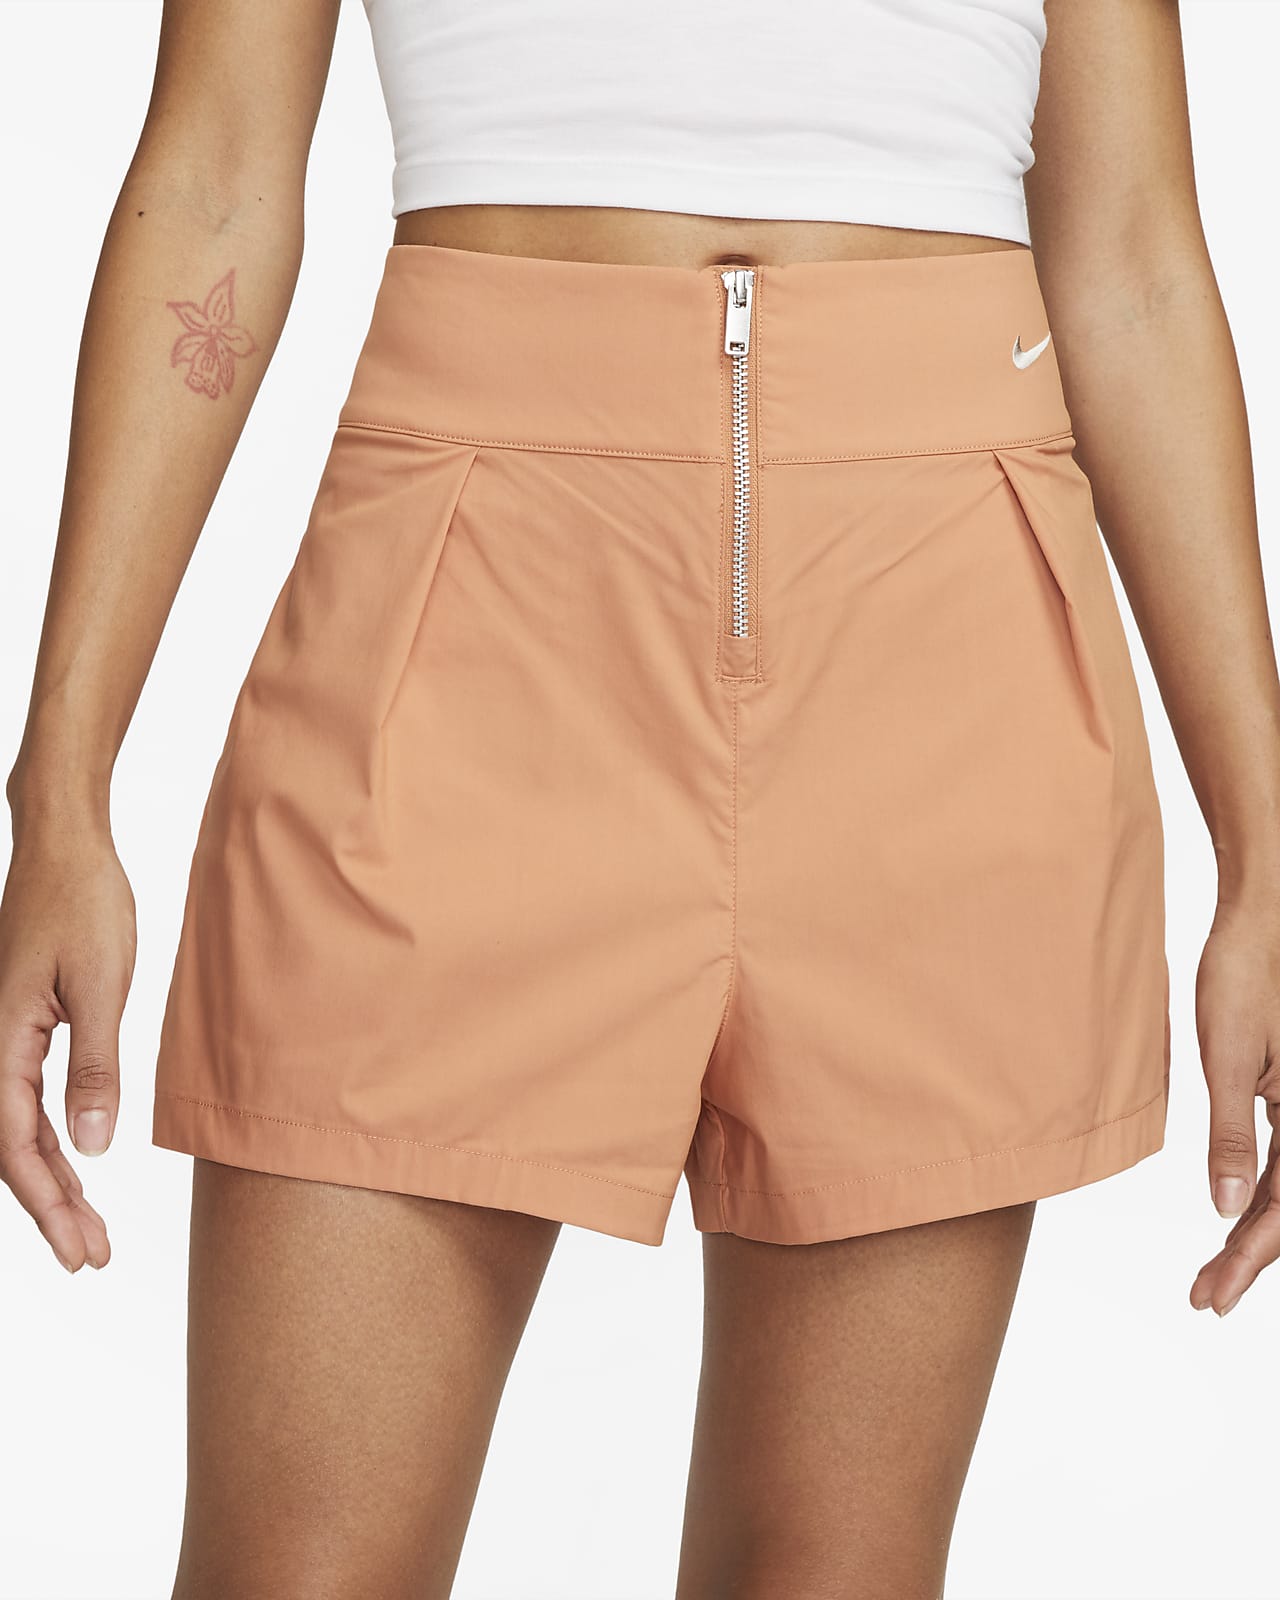 Trouser Women\'s Nike Collection Shorts. Sportswear